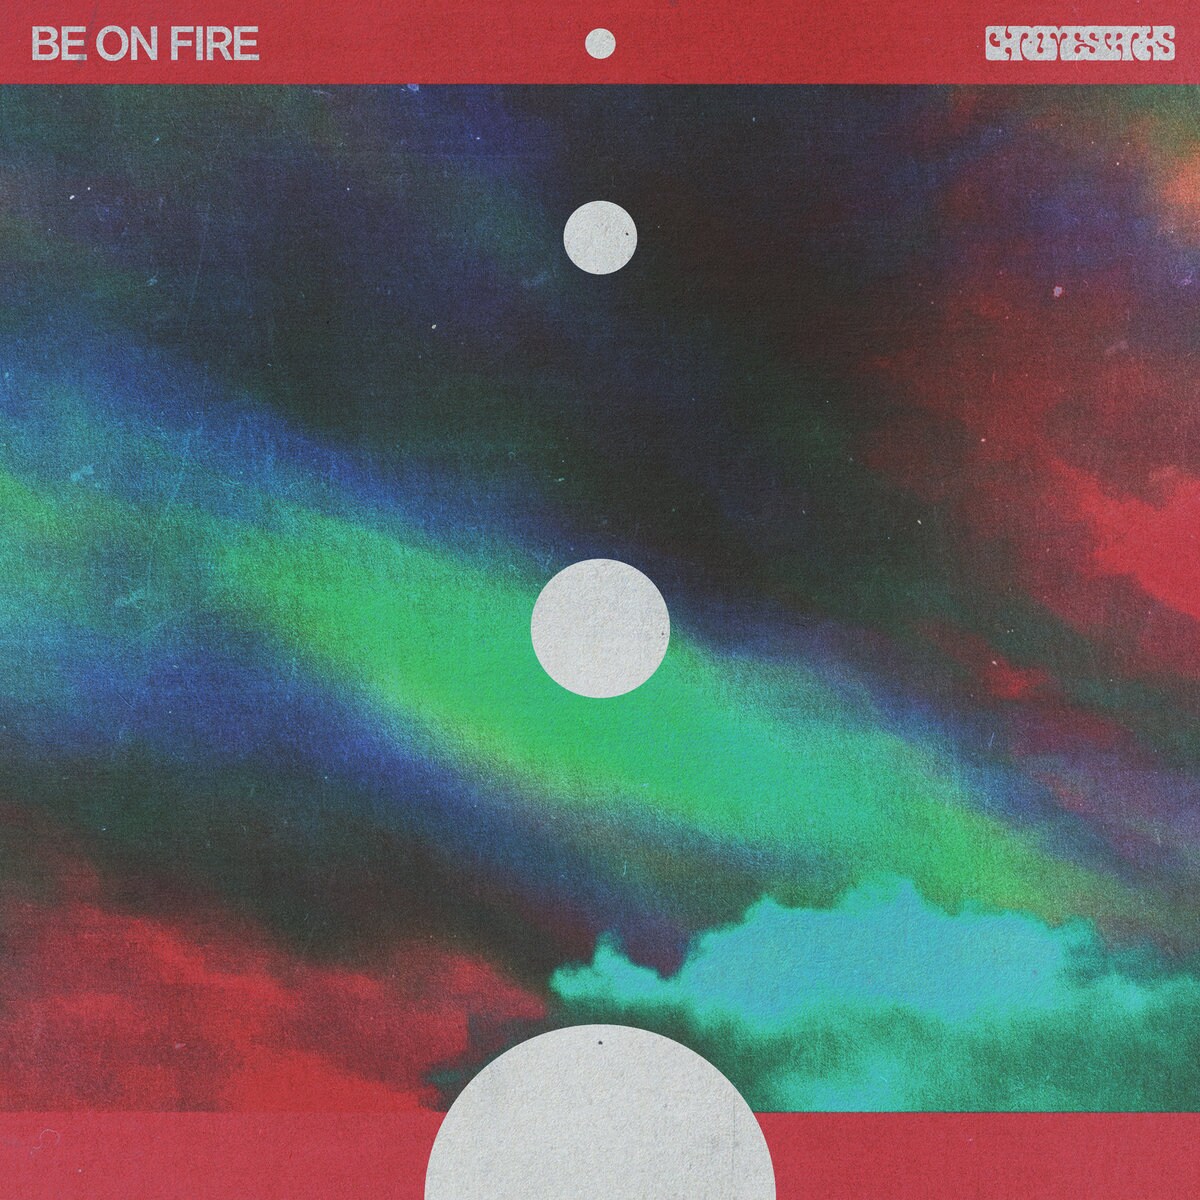 7. Chrome Sparks - Be On Fire EP